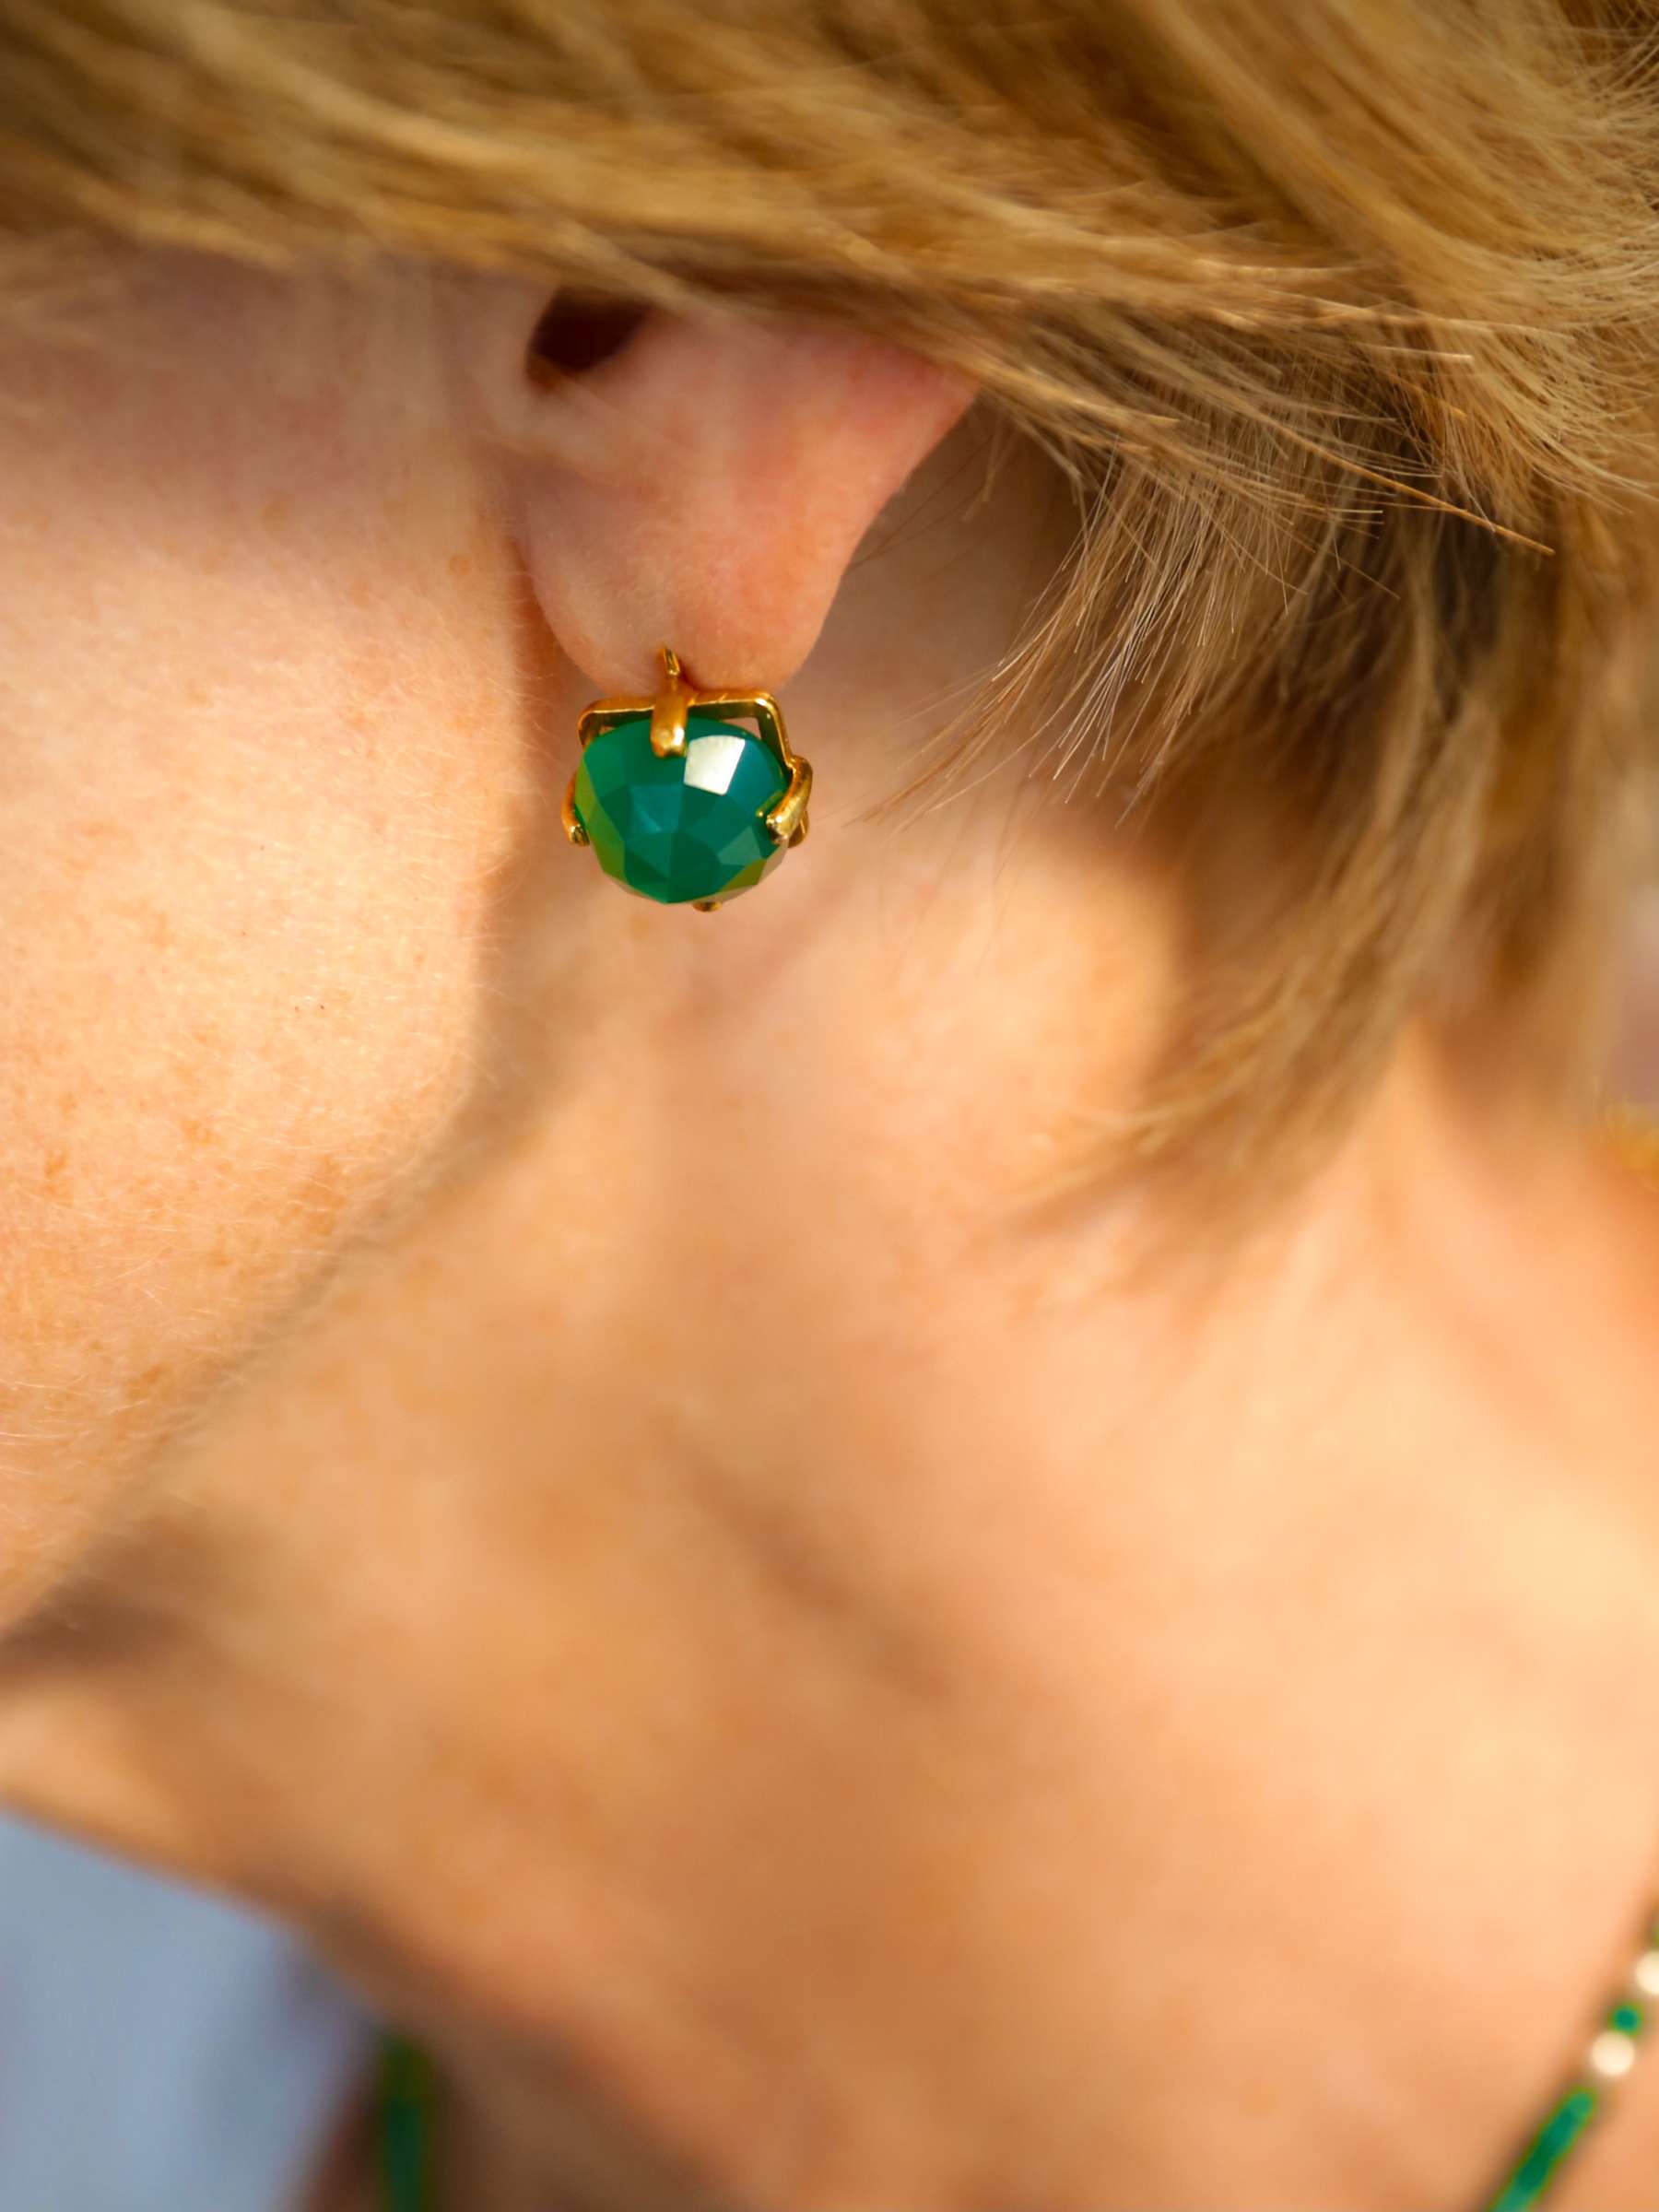 Buy Deborah Blyth Green Agate Square Drop Earrings, Gold Online at johnlewis.com